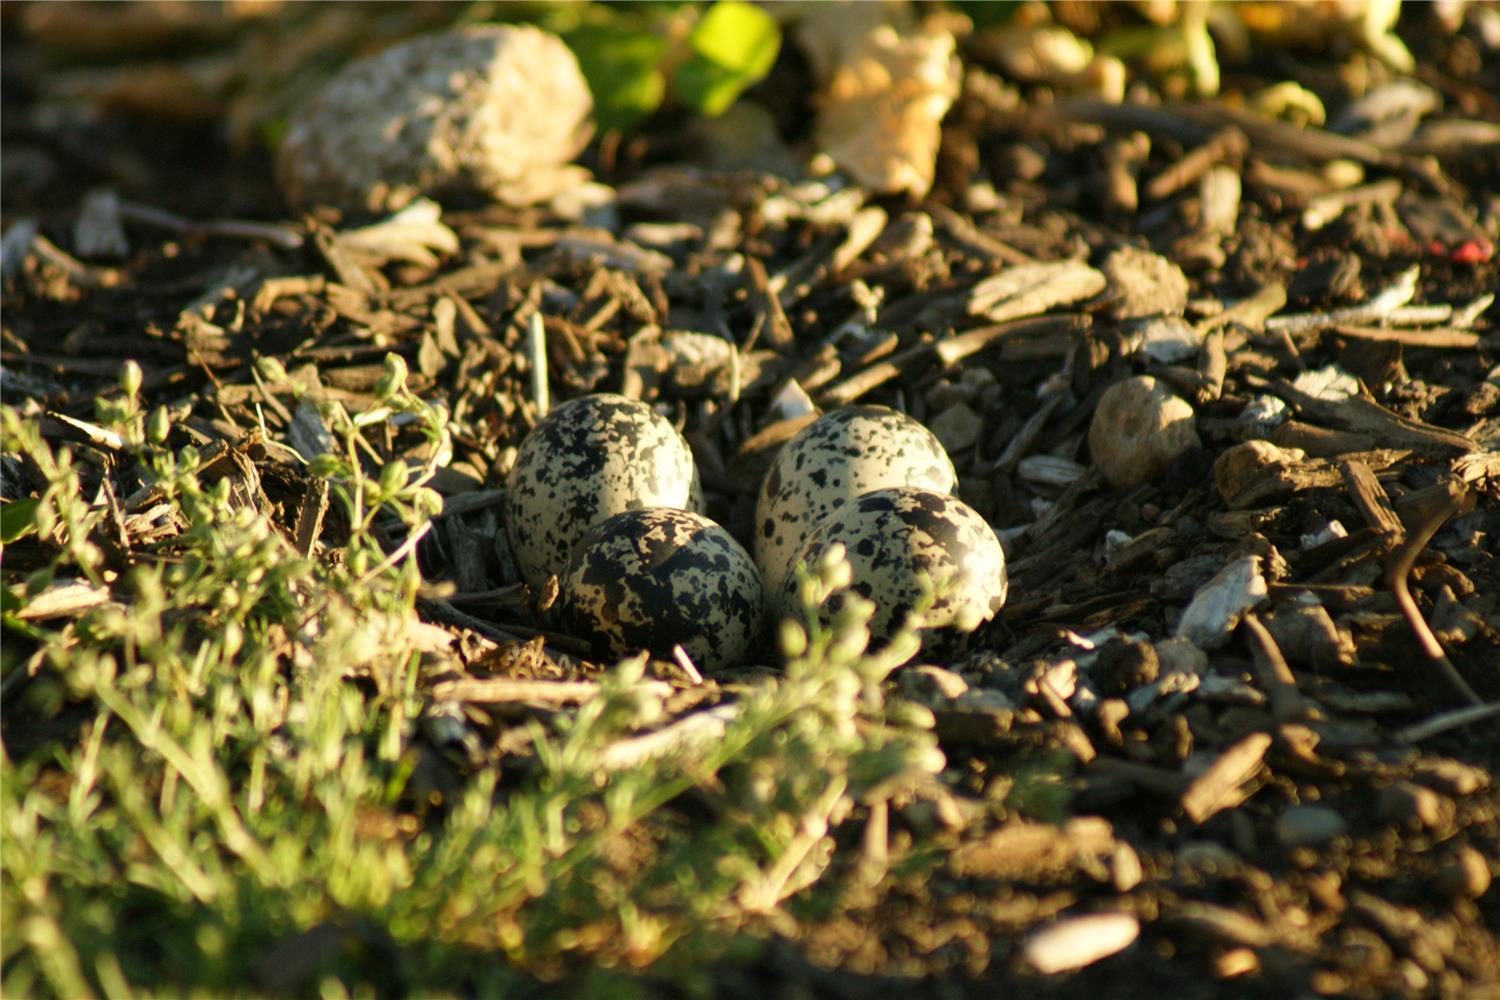 Killdeer nest with eggs